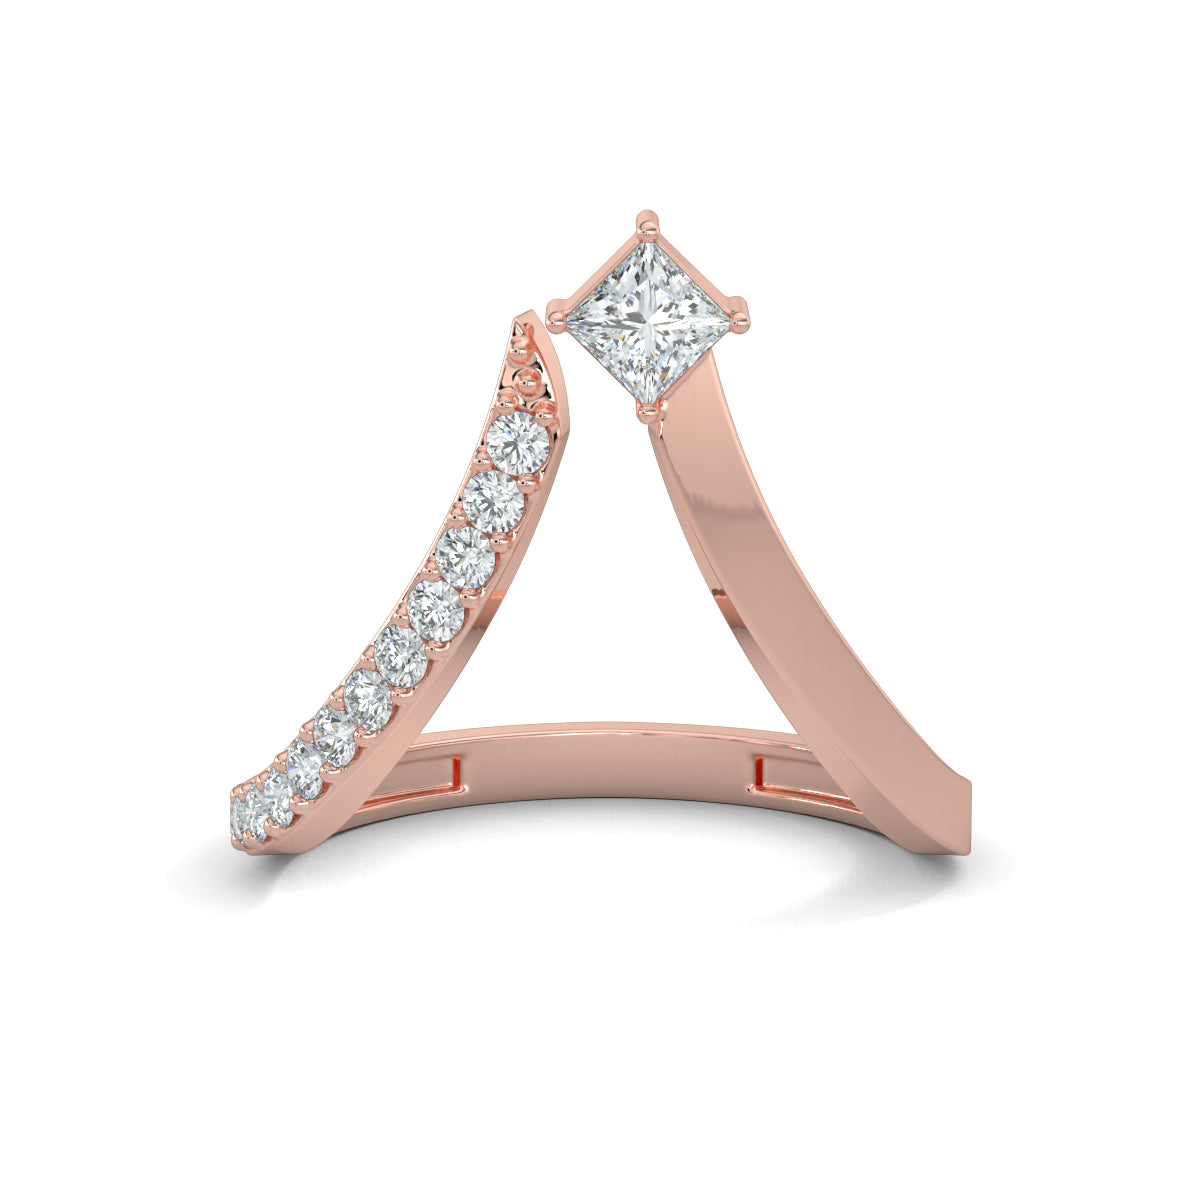 Rose Gold, Diamond Ring, Radiant Embrace Ring, Natural Diamond Ring, Lab-Grown Diamond Ring, Split Shank Band Ring, V-Shaped Ring, Round Diamond Ring, Princess-Cut Diamond Ring, Elegance, Romance, Contemporary Jewelry